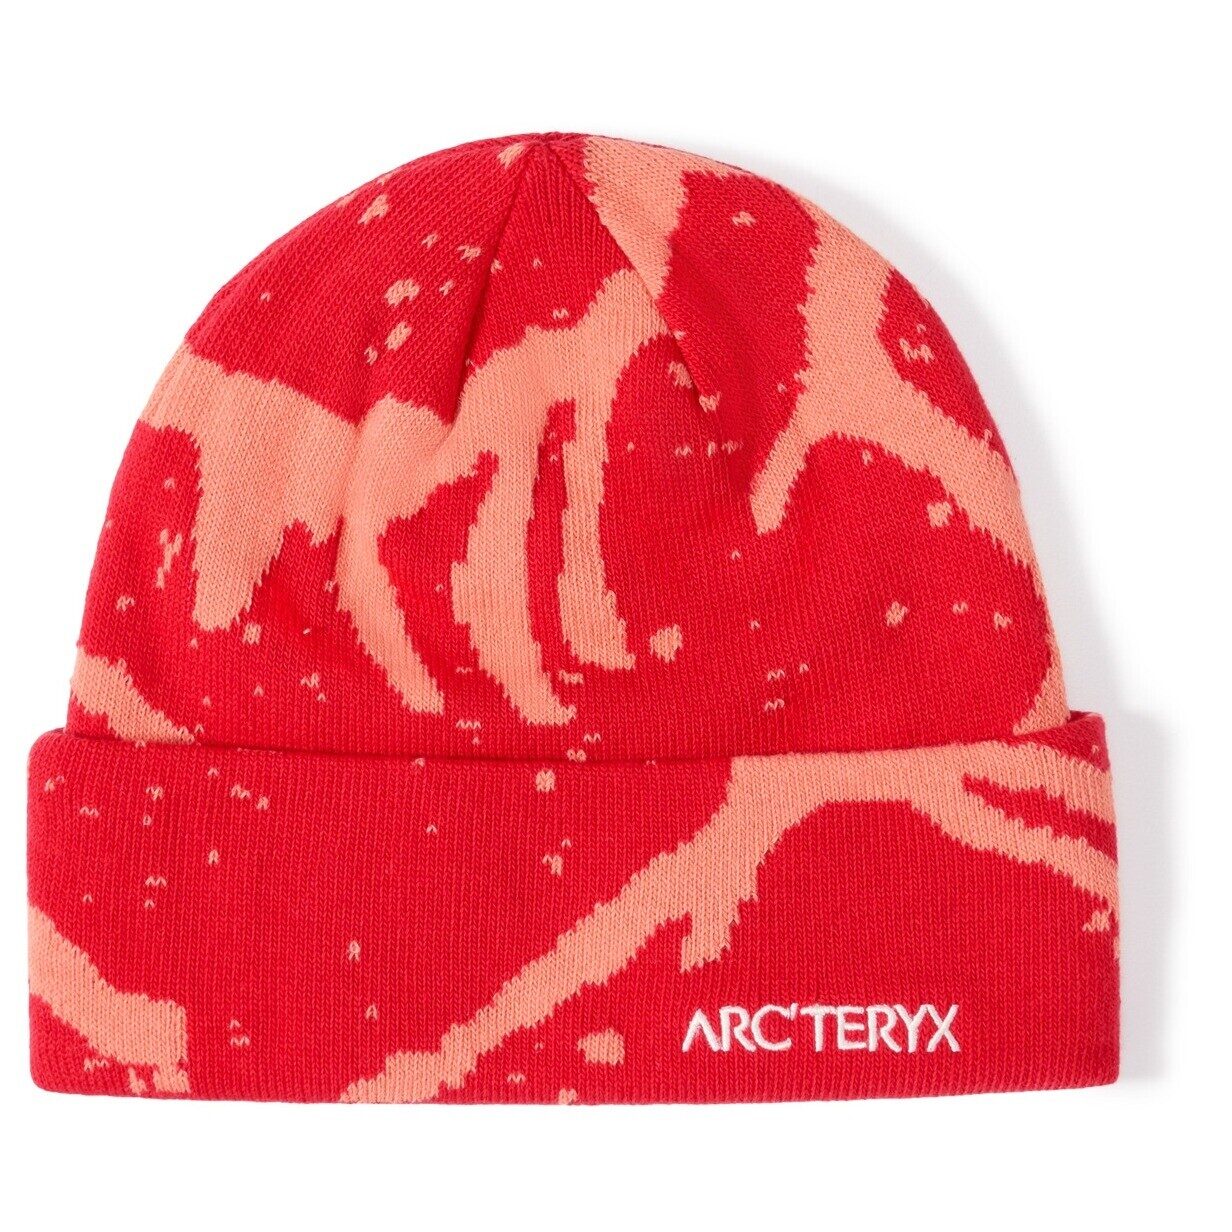 Arcteryx Grotto Toque Hat